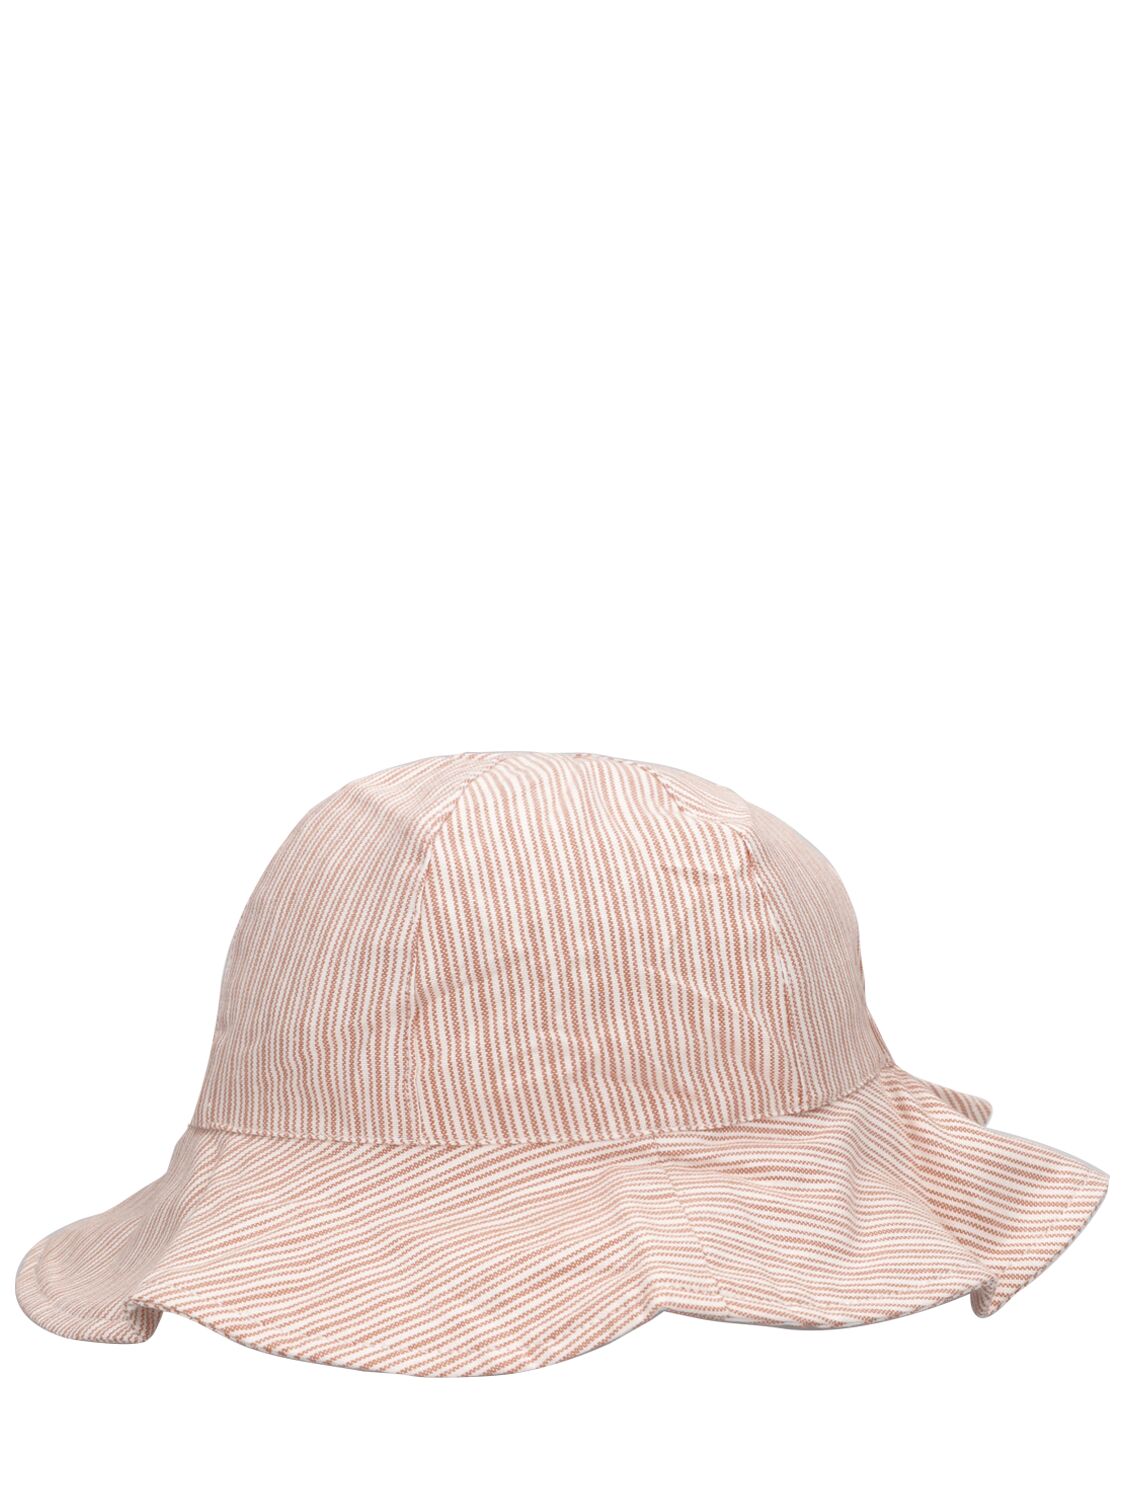 Image of Striped Organic Cotton Sun Hat